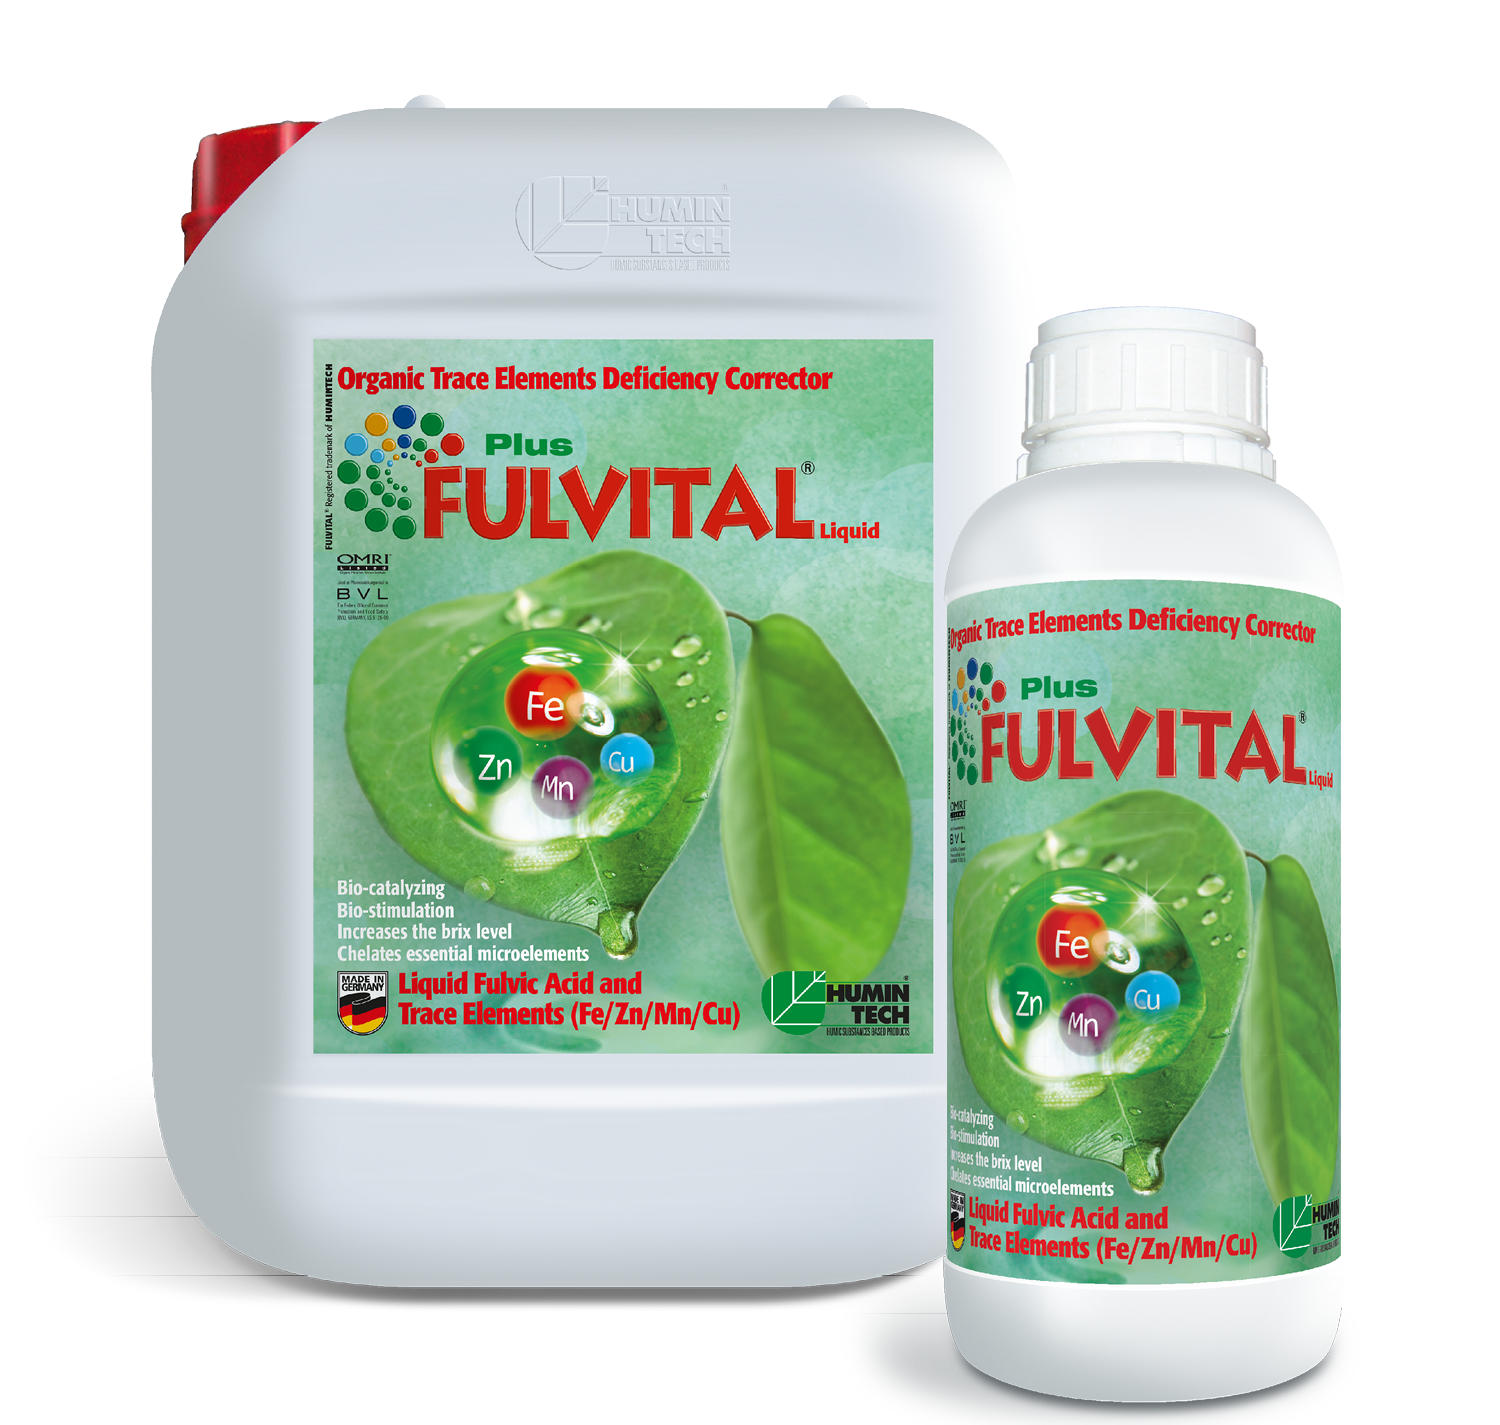 FULVITAL Plus Liquid Organic Micronutrient Deficiency Corrector Liquid Fulvates and Micronutrients (Fe/ Zn/ Mn/ Cu)